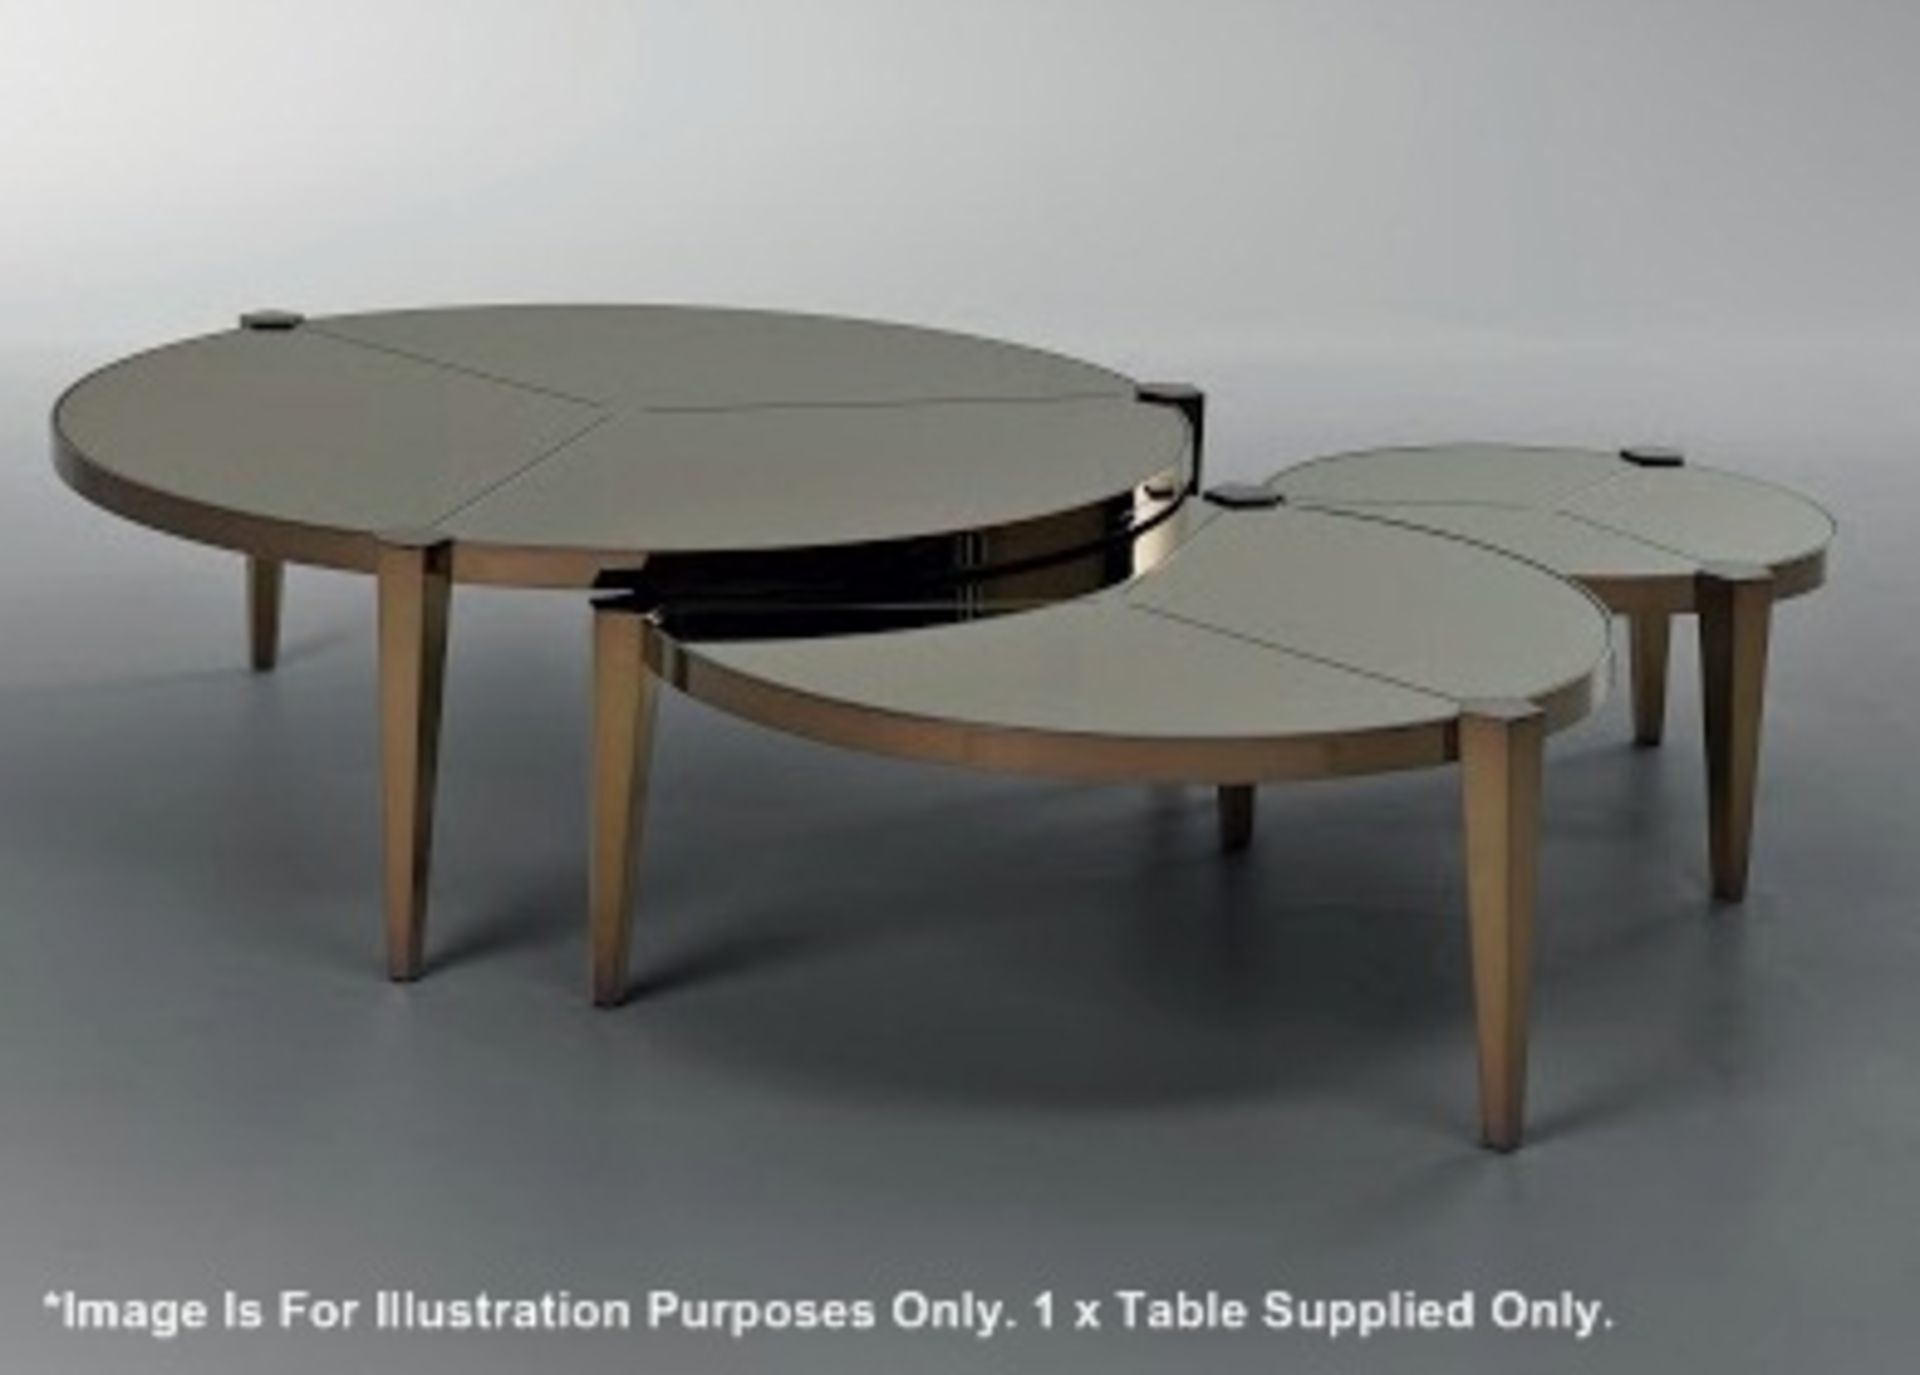 1 x FENDI Regina Coffee Mirrored Table Top - Dimensions: 120cm, Thickness 4.2cm - Ref: 4887171 -